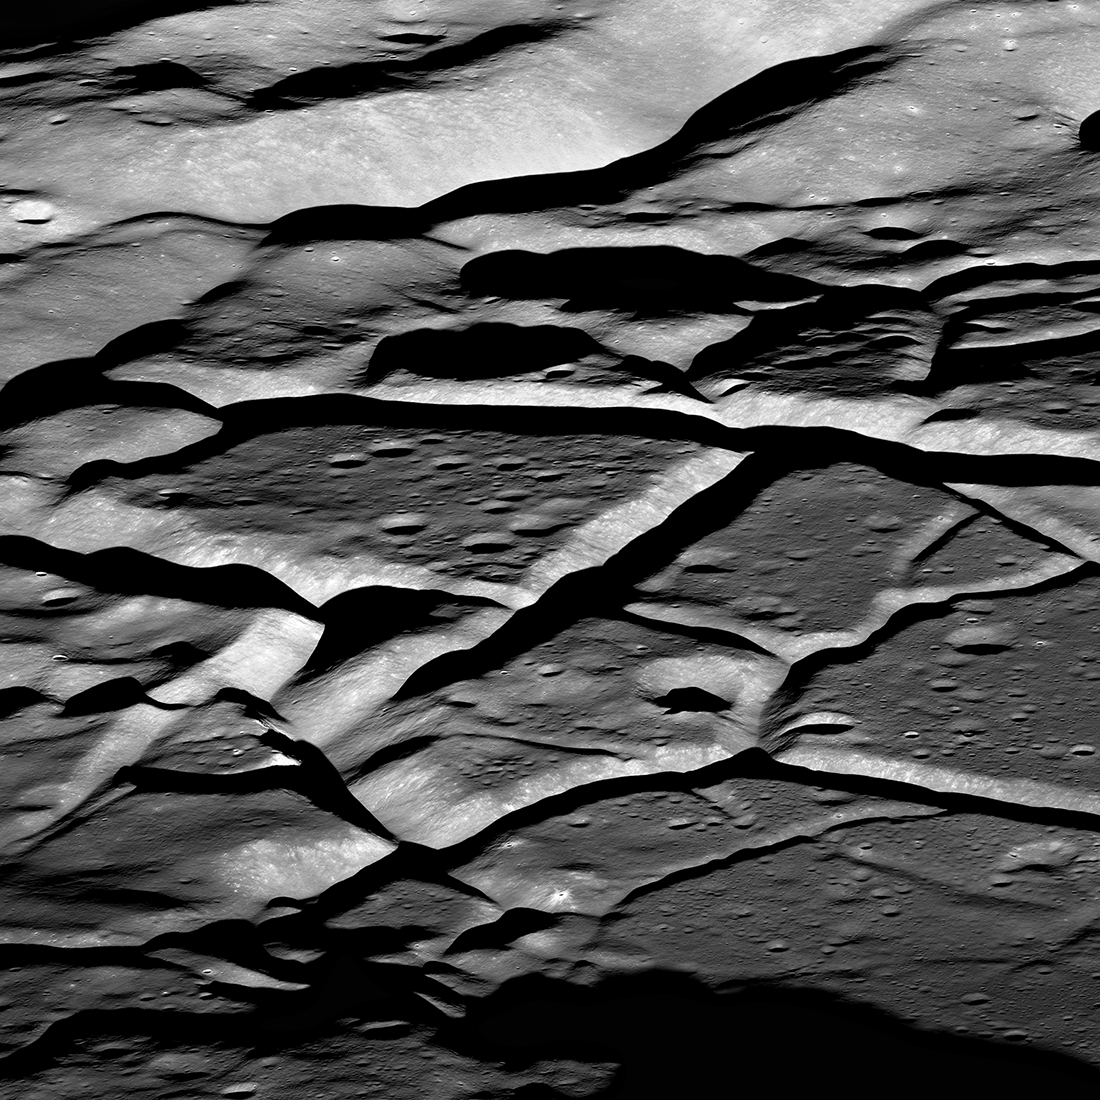 deep grooves in gray lunar terrain